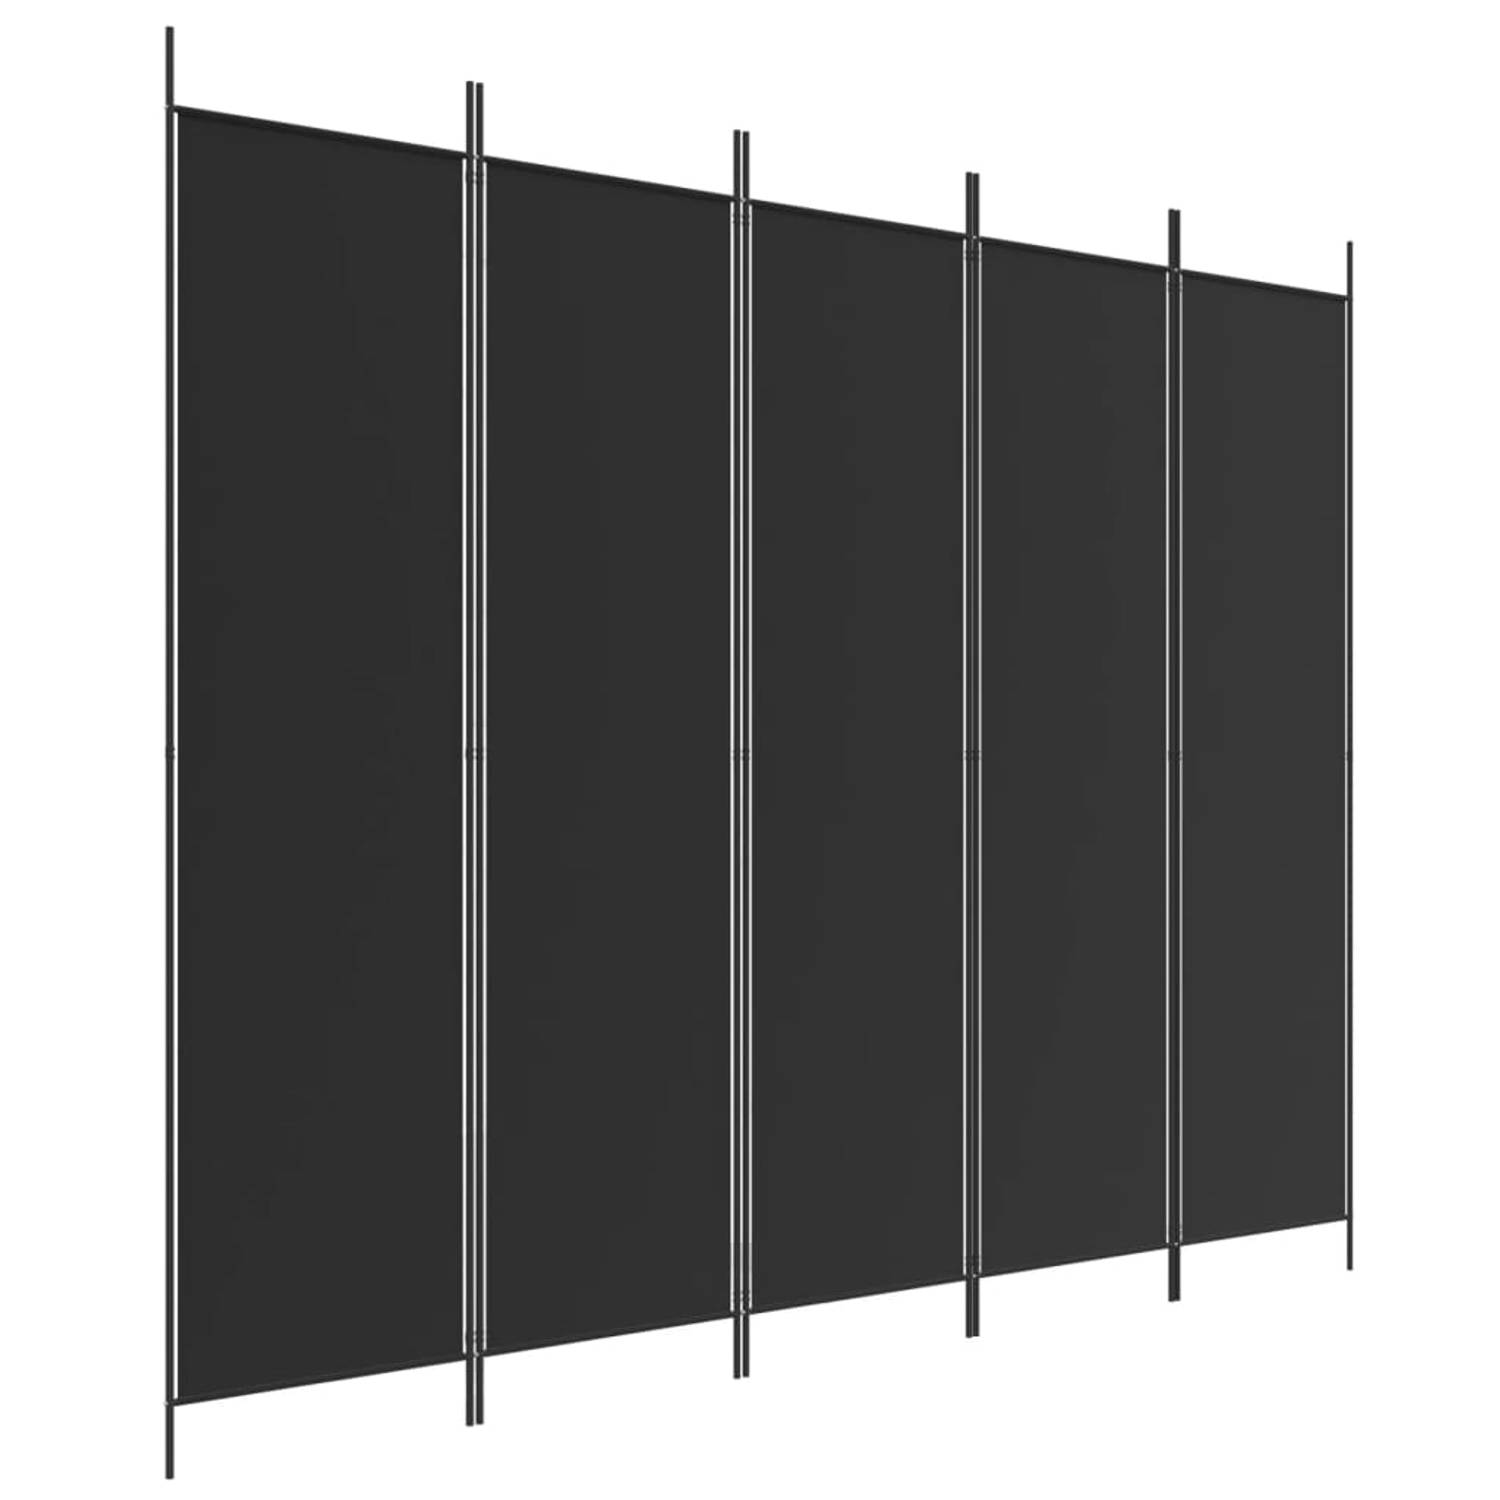 The Living Store Kamerscherm Zwart 5 Panelen - 250 x 200 cm - Inklapbaar